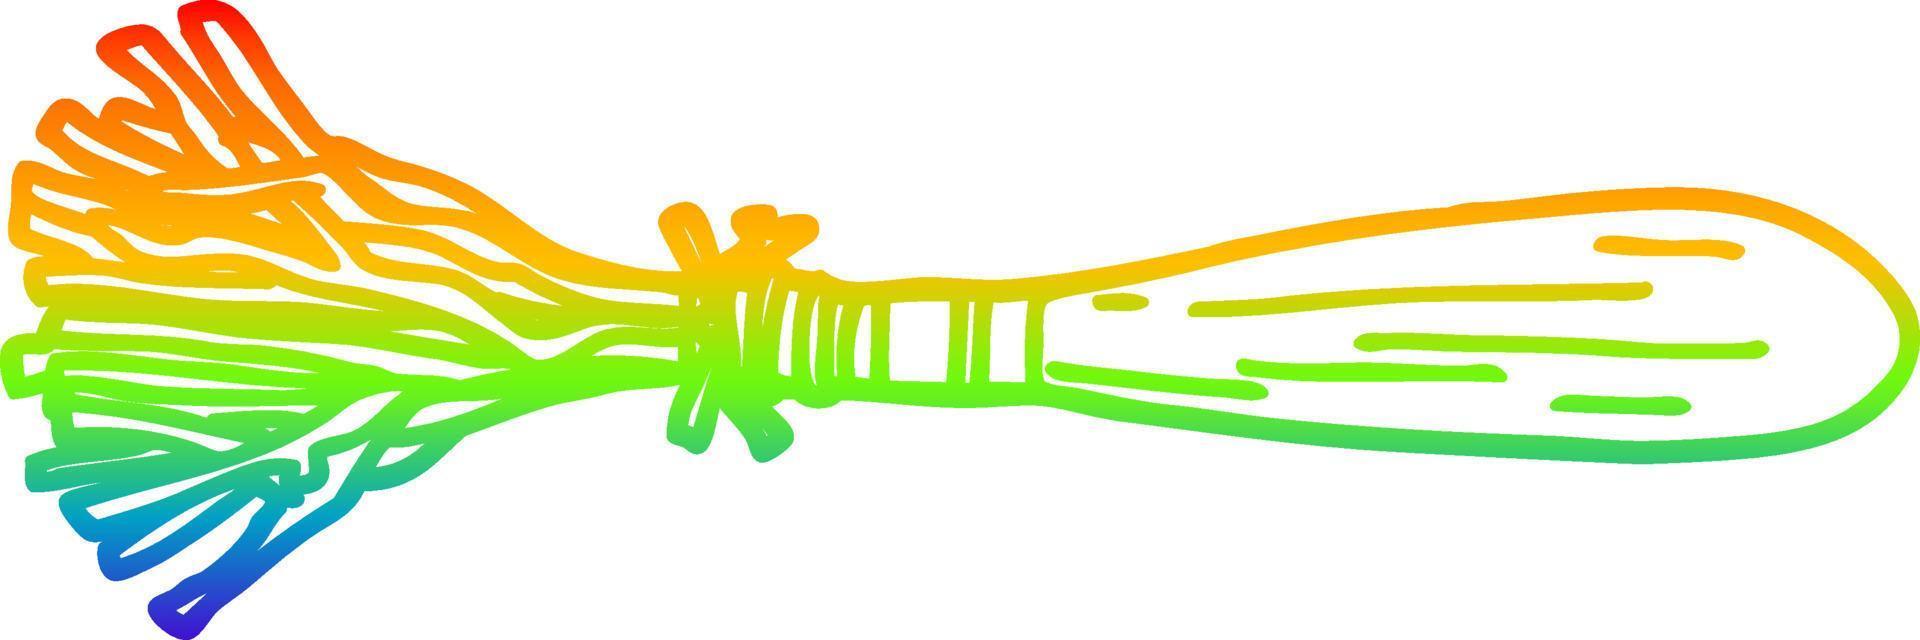 rainbow gradient line drawing cartoon magic broom vector